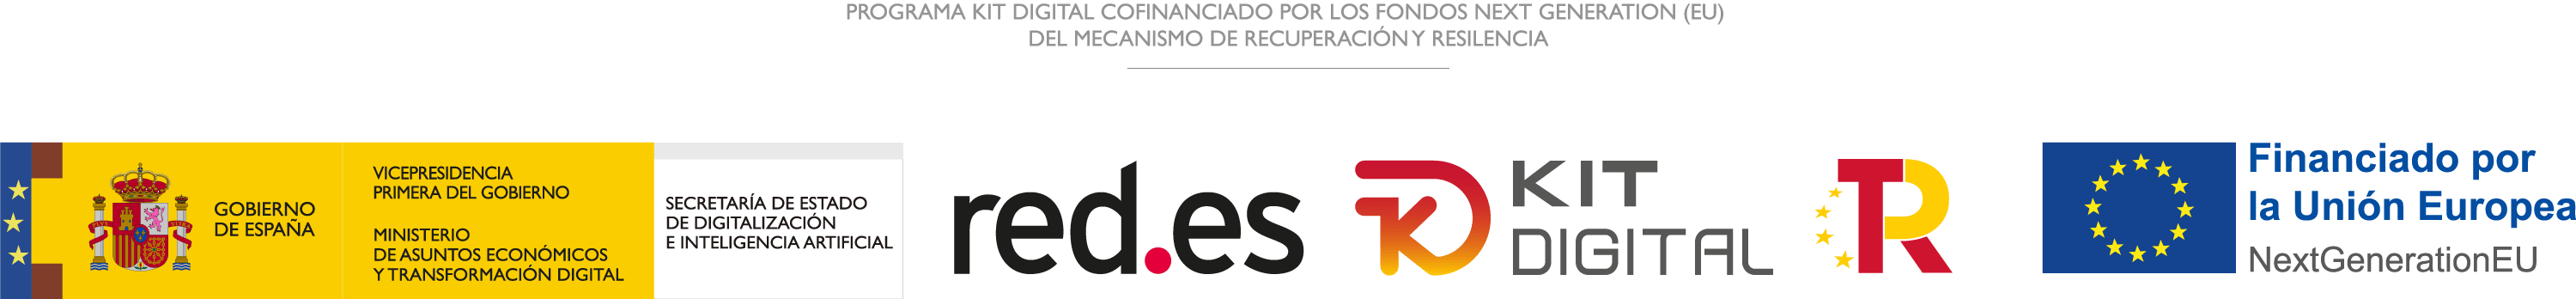 Logo Programa Kit Digital Fondo Europeo